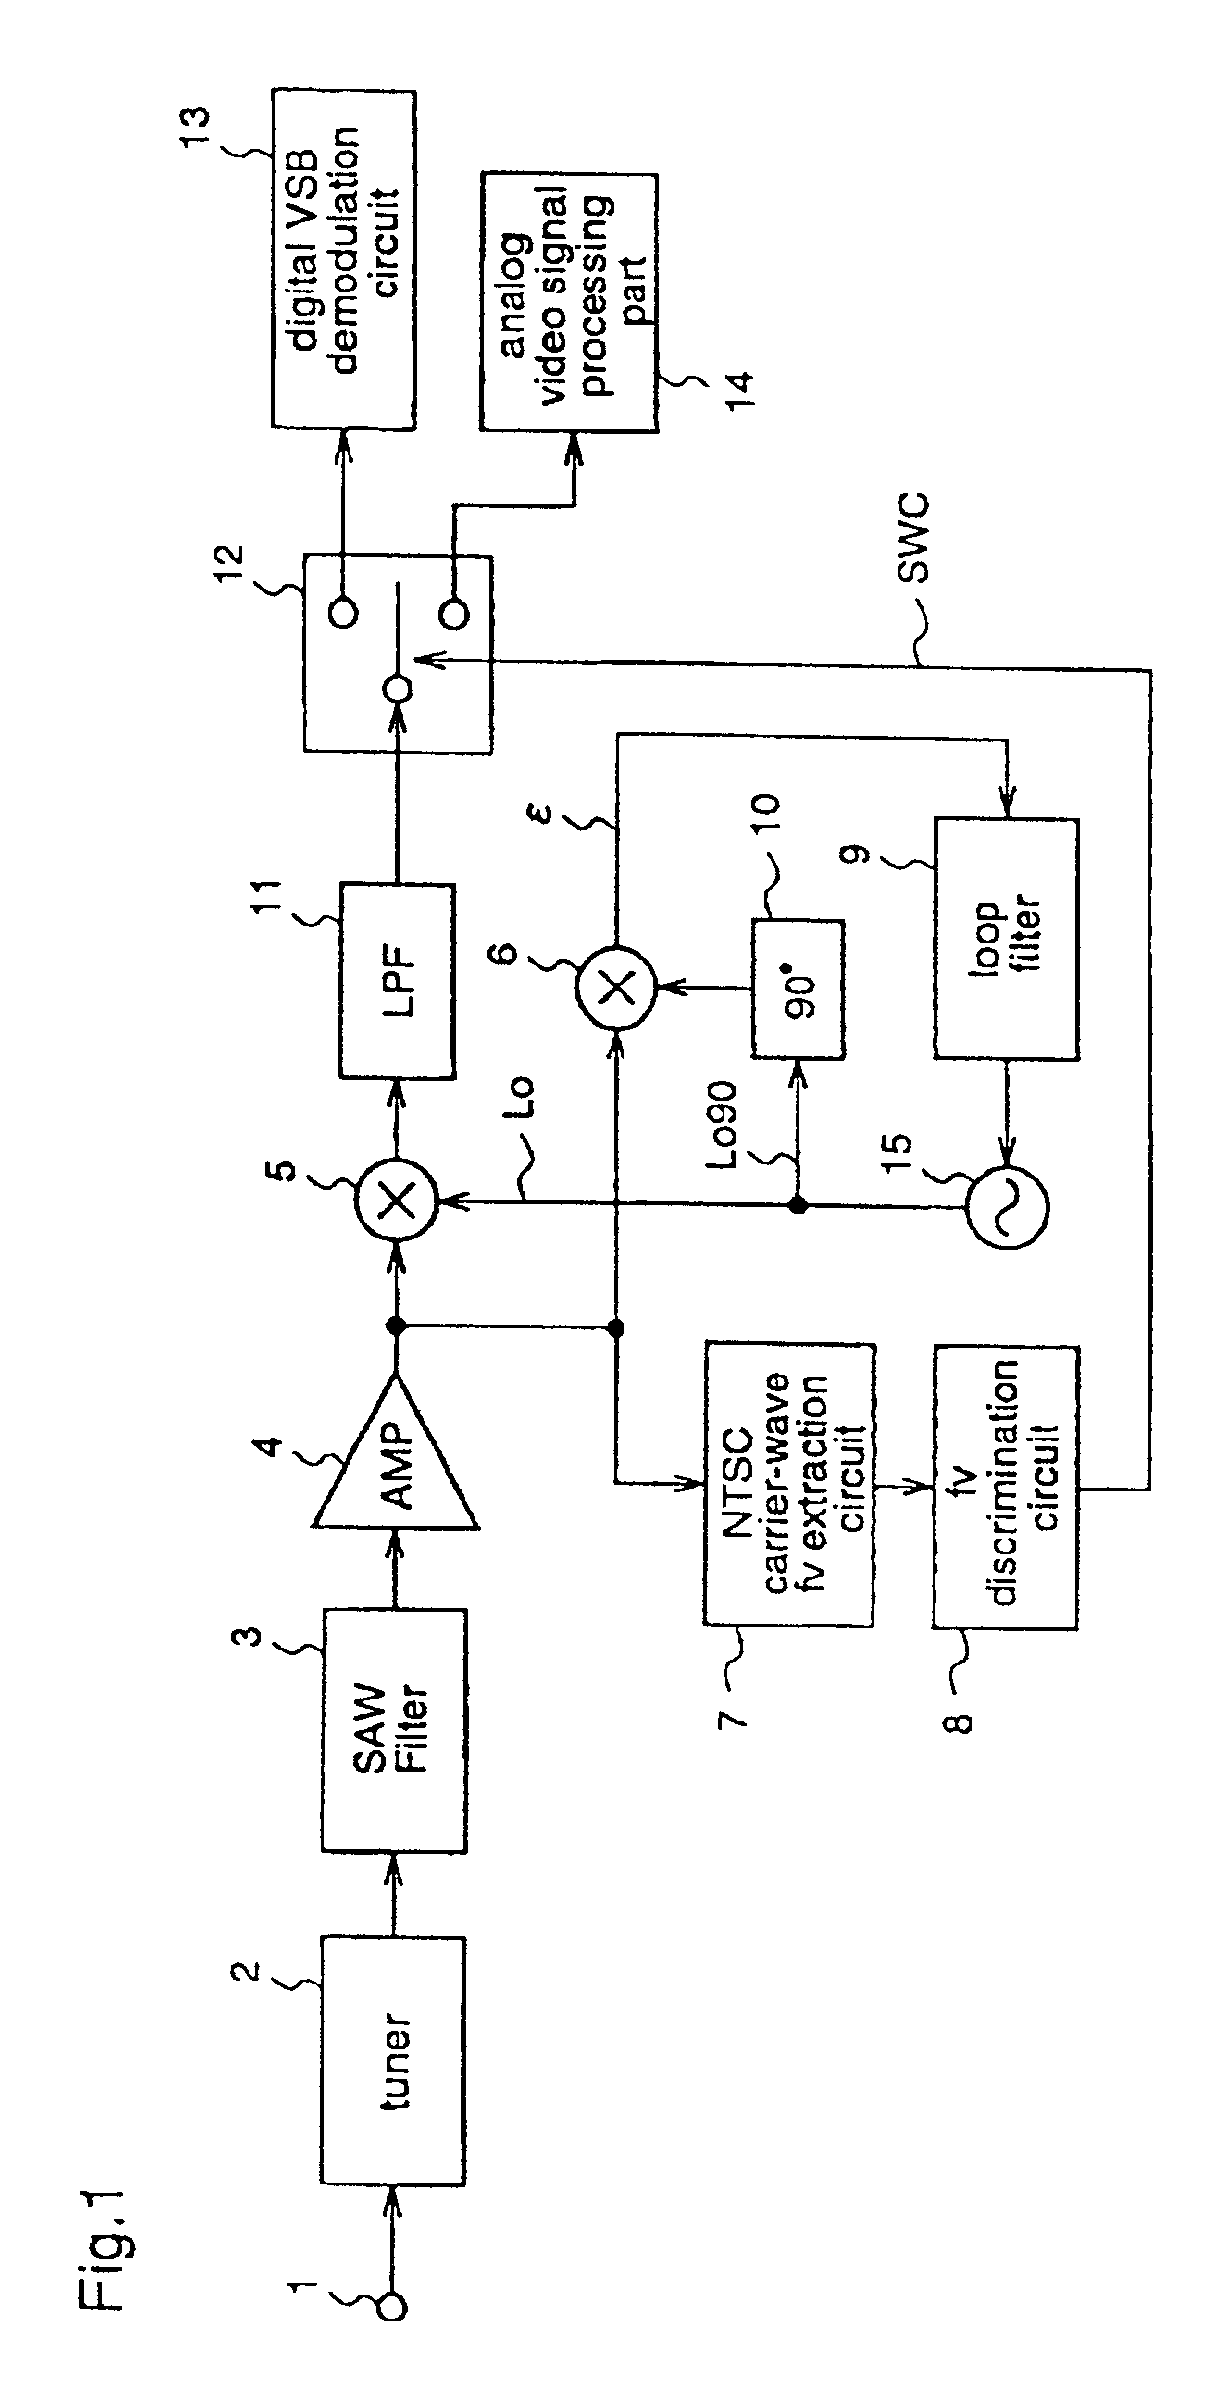 Multi-system correspondence receiver